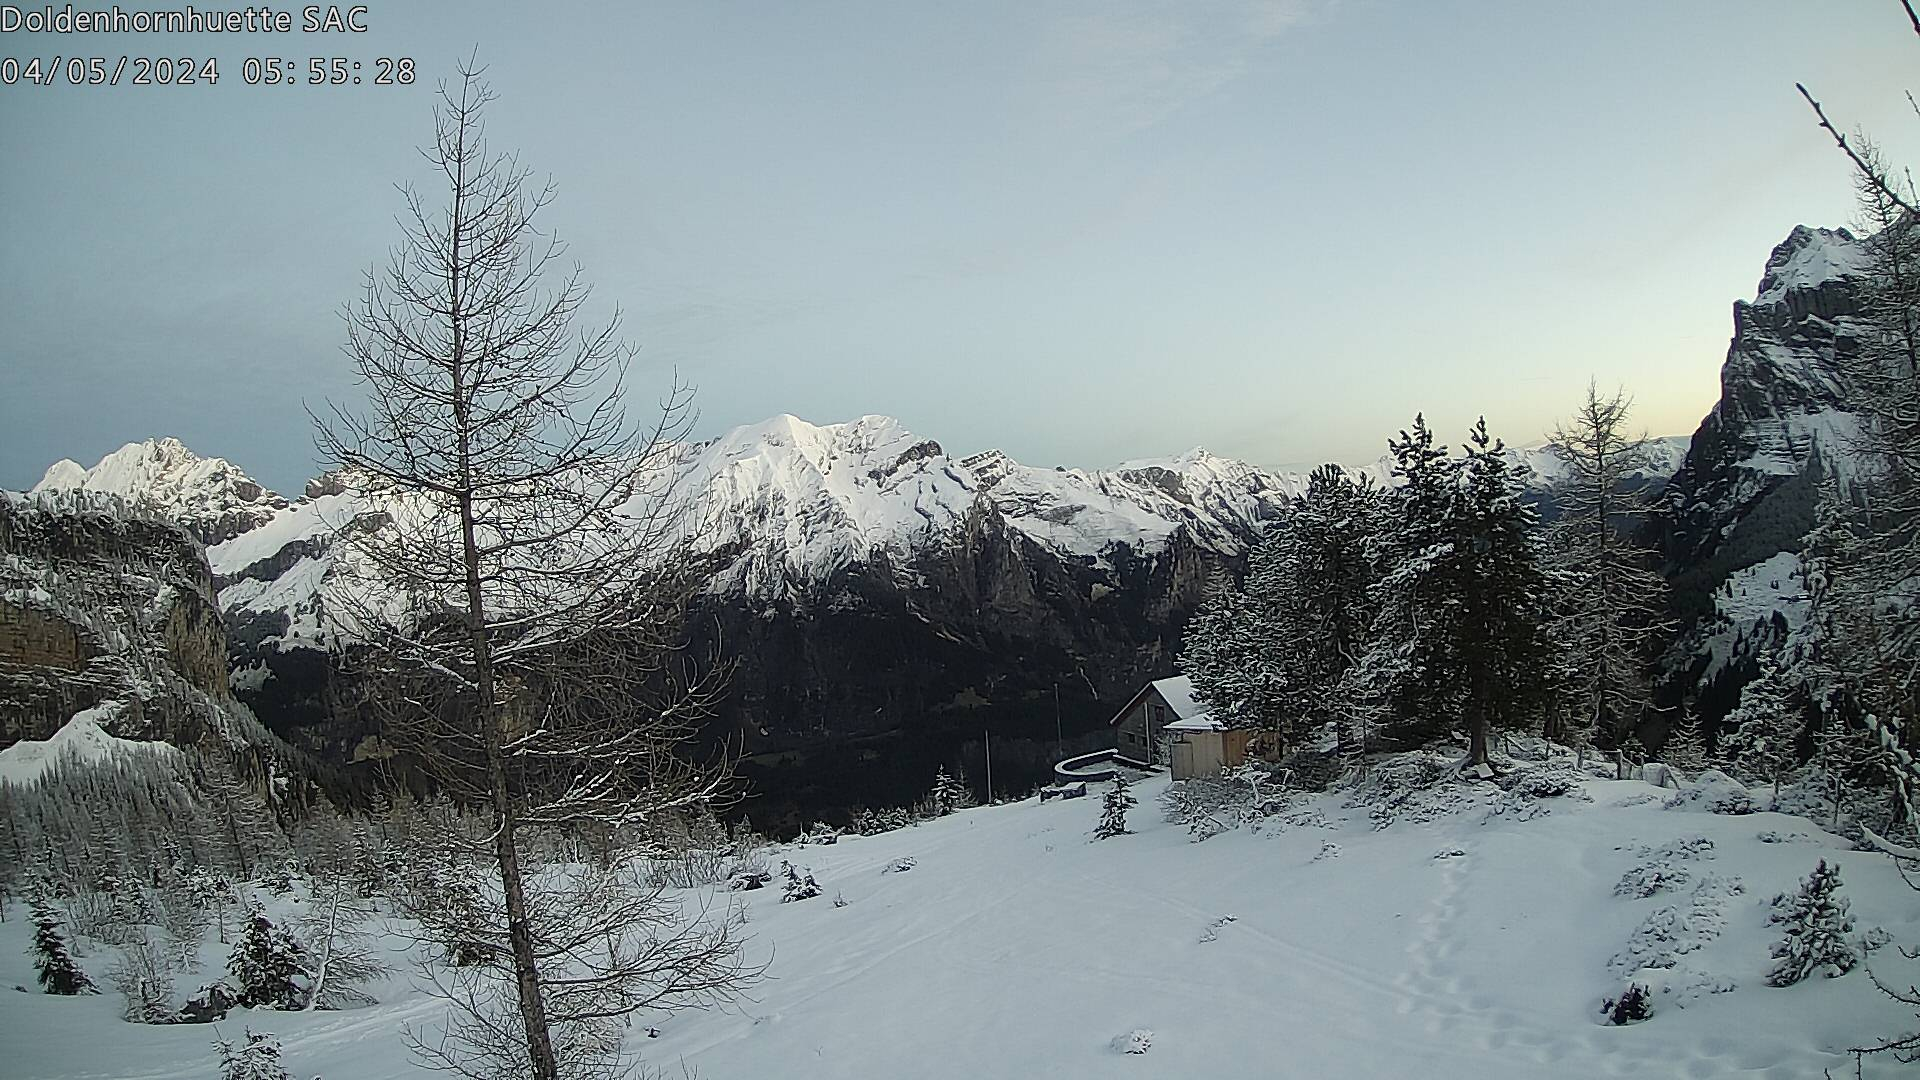 Kandersteg Doldenhornhütte